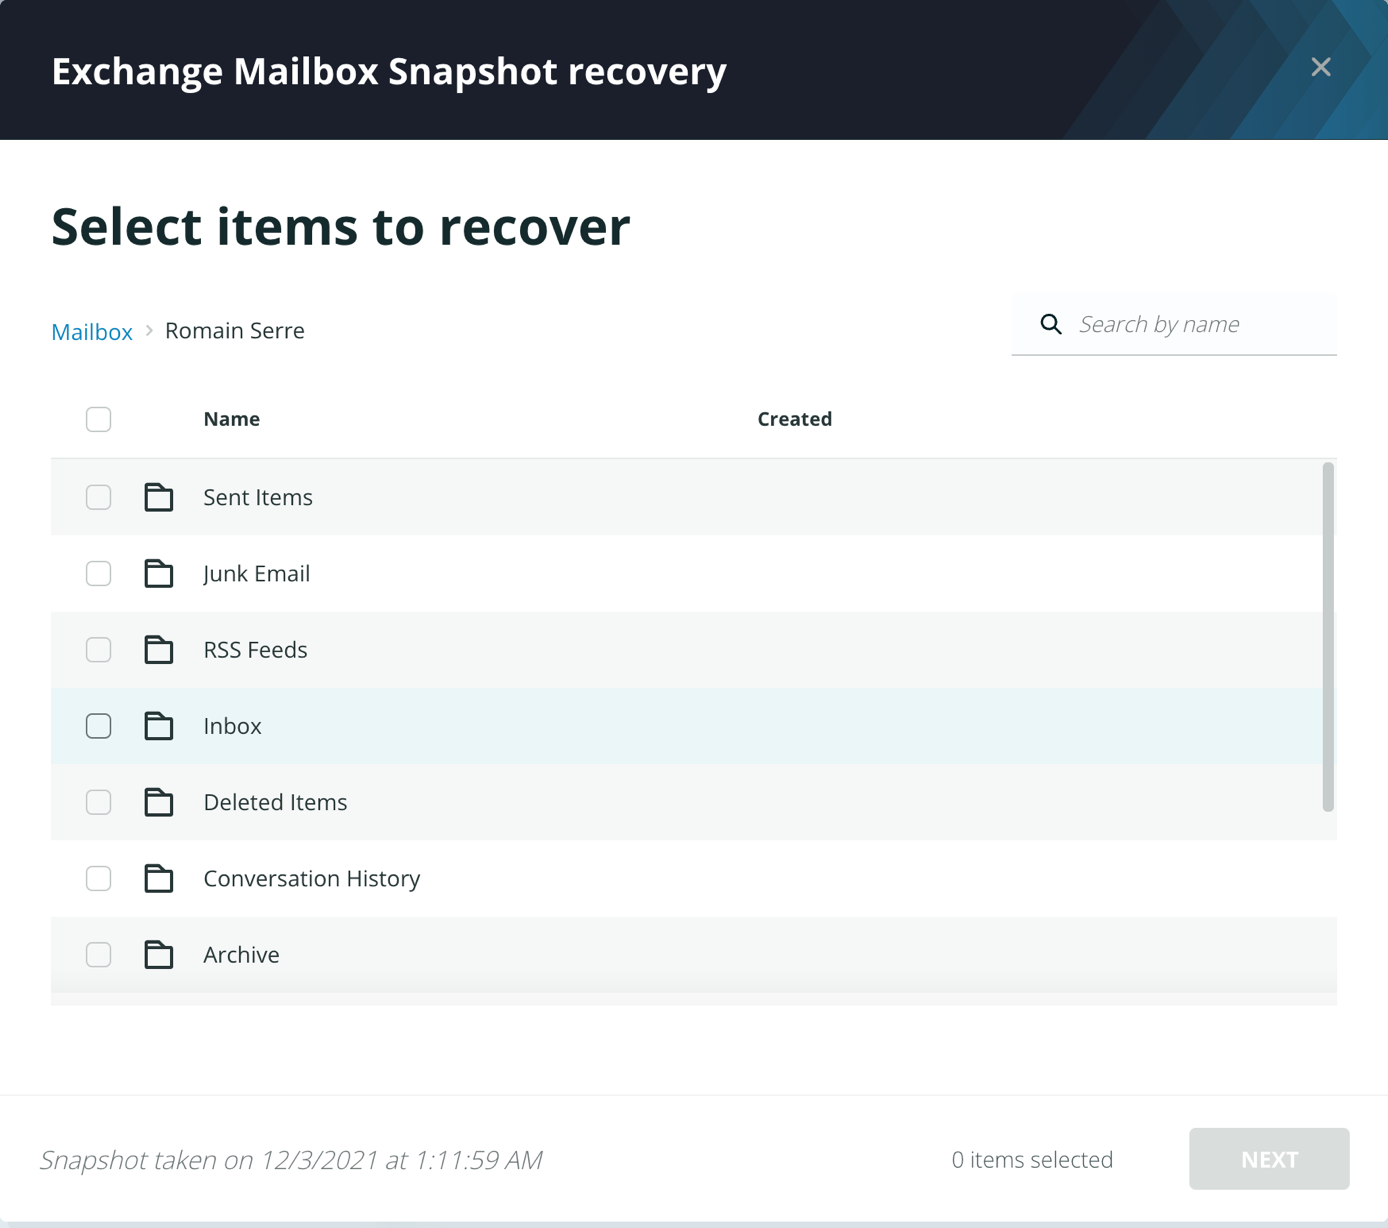 Exchange Mailbox Snapshot recovery